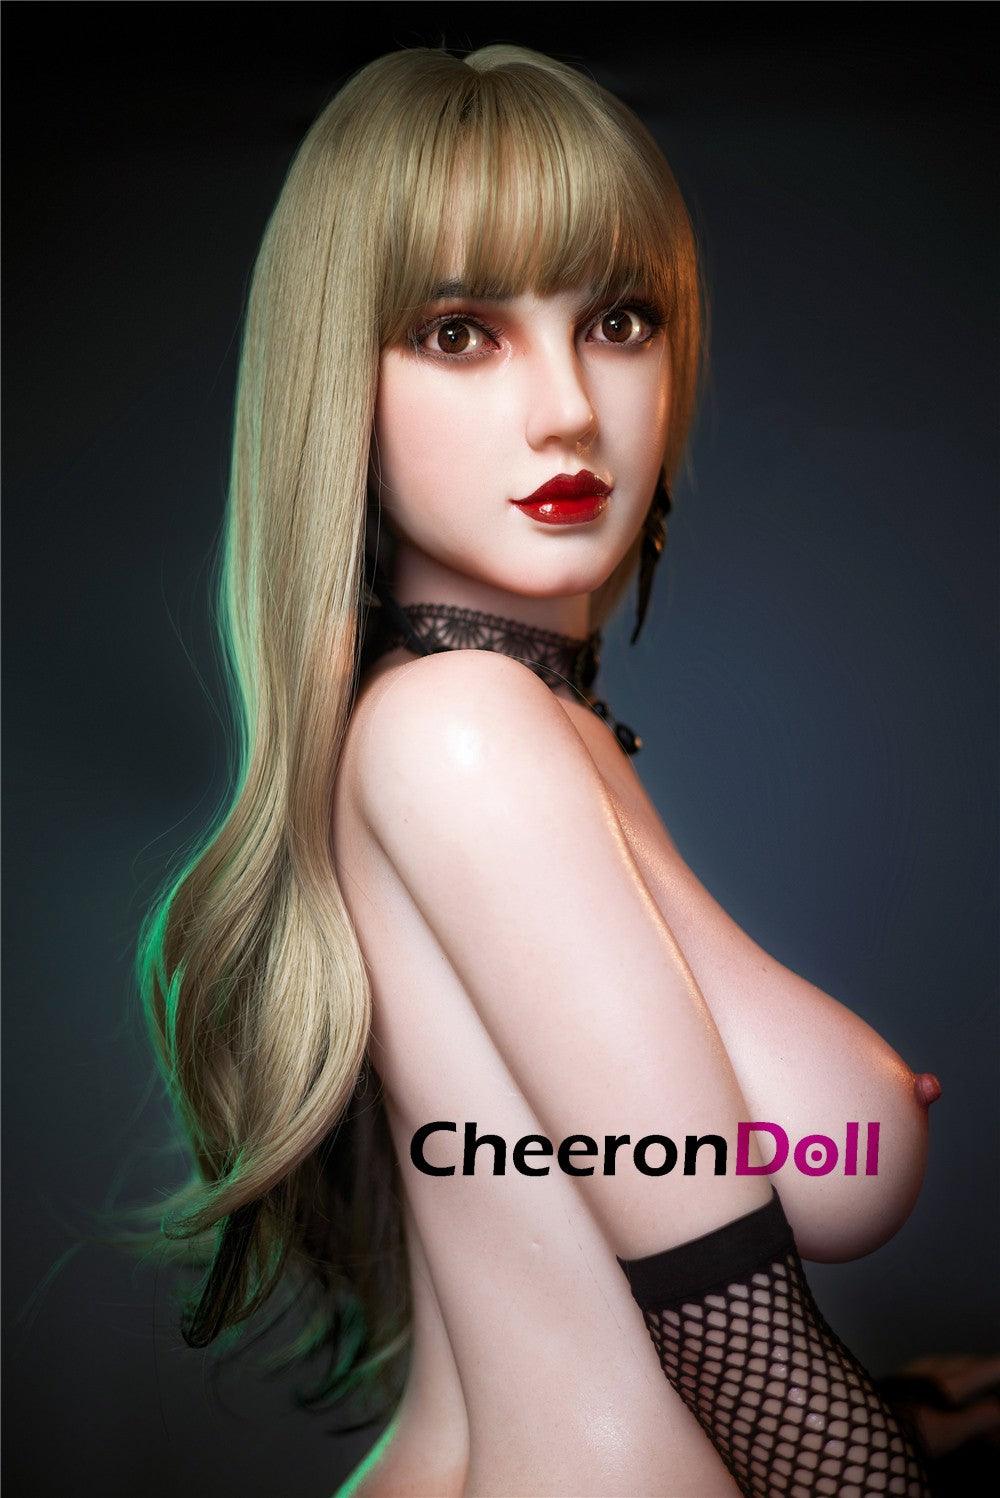 CHEERONDOLL 153CM SILICONE PRINCESS LOVE DREAM DOLLS S9 CHERRY - Cheeron Doll